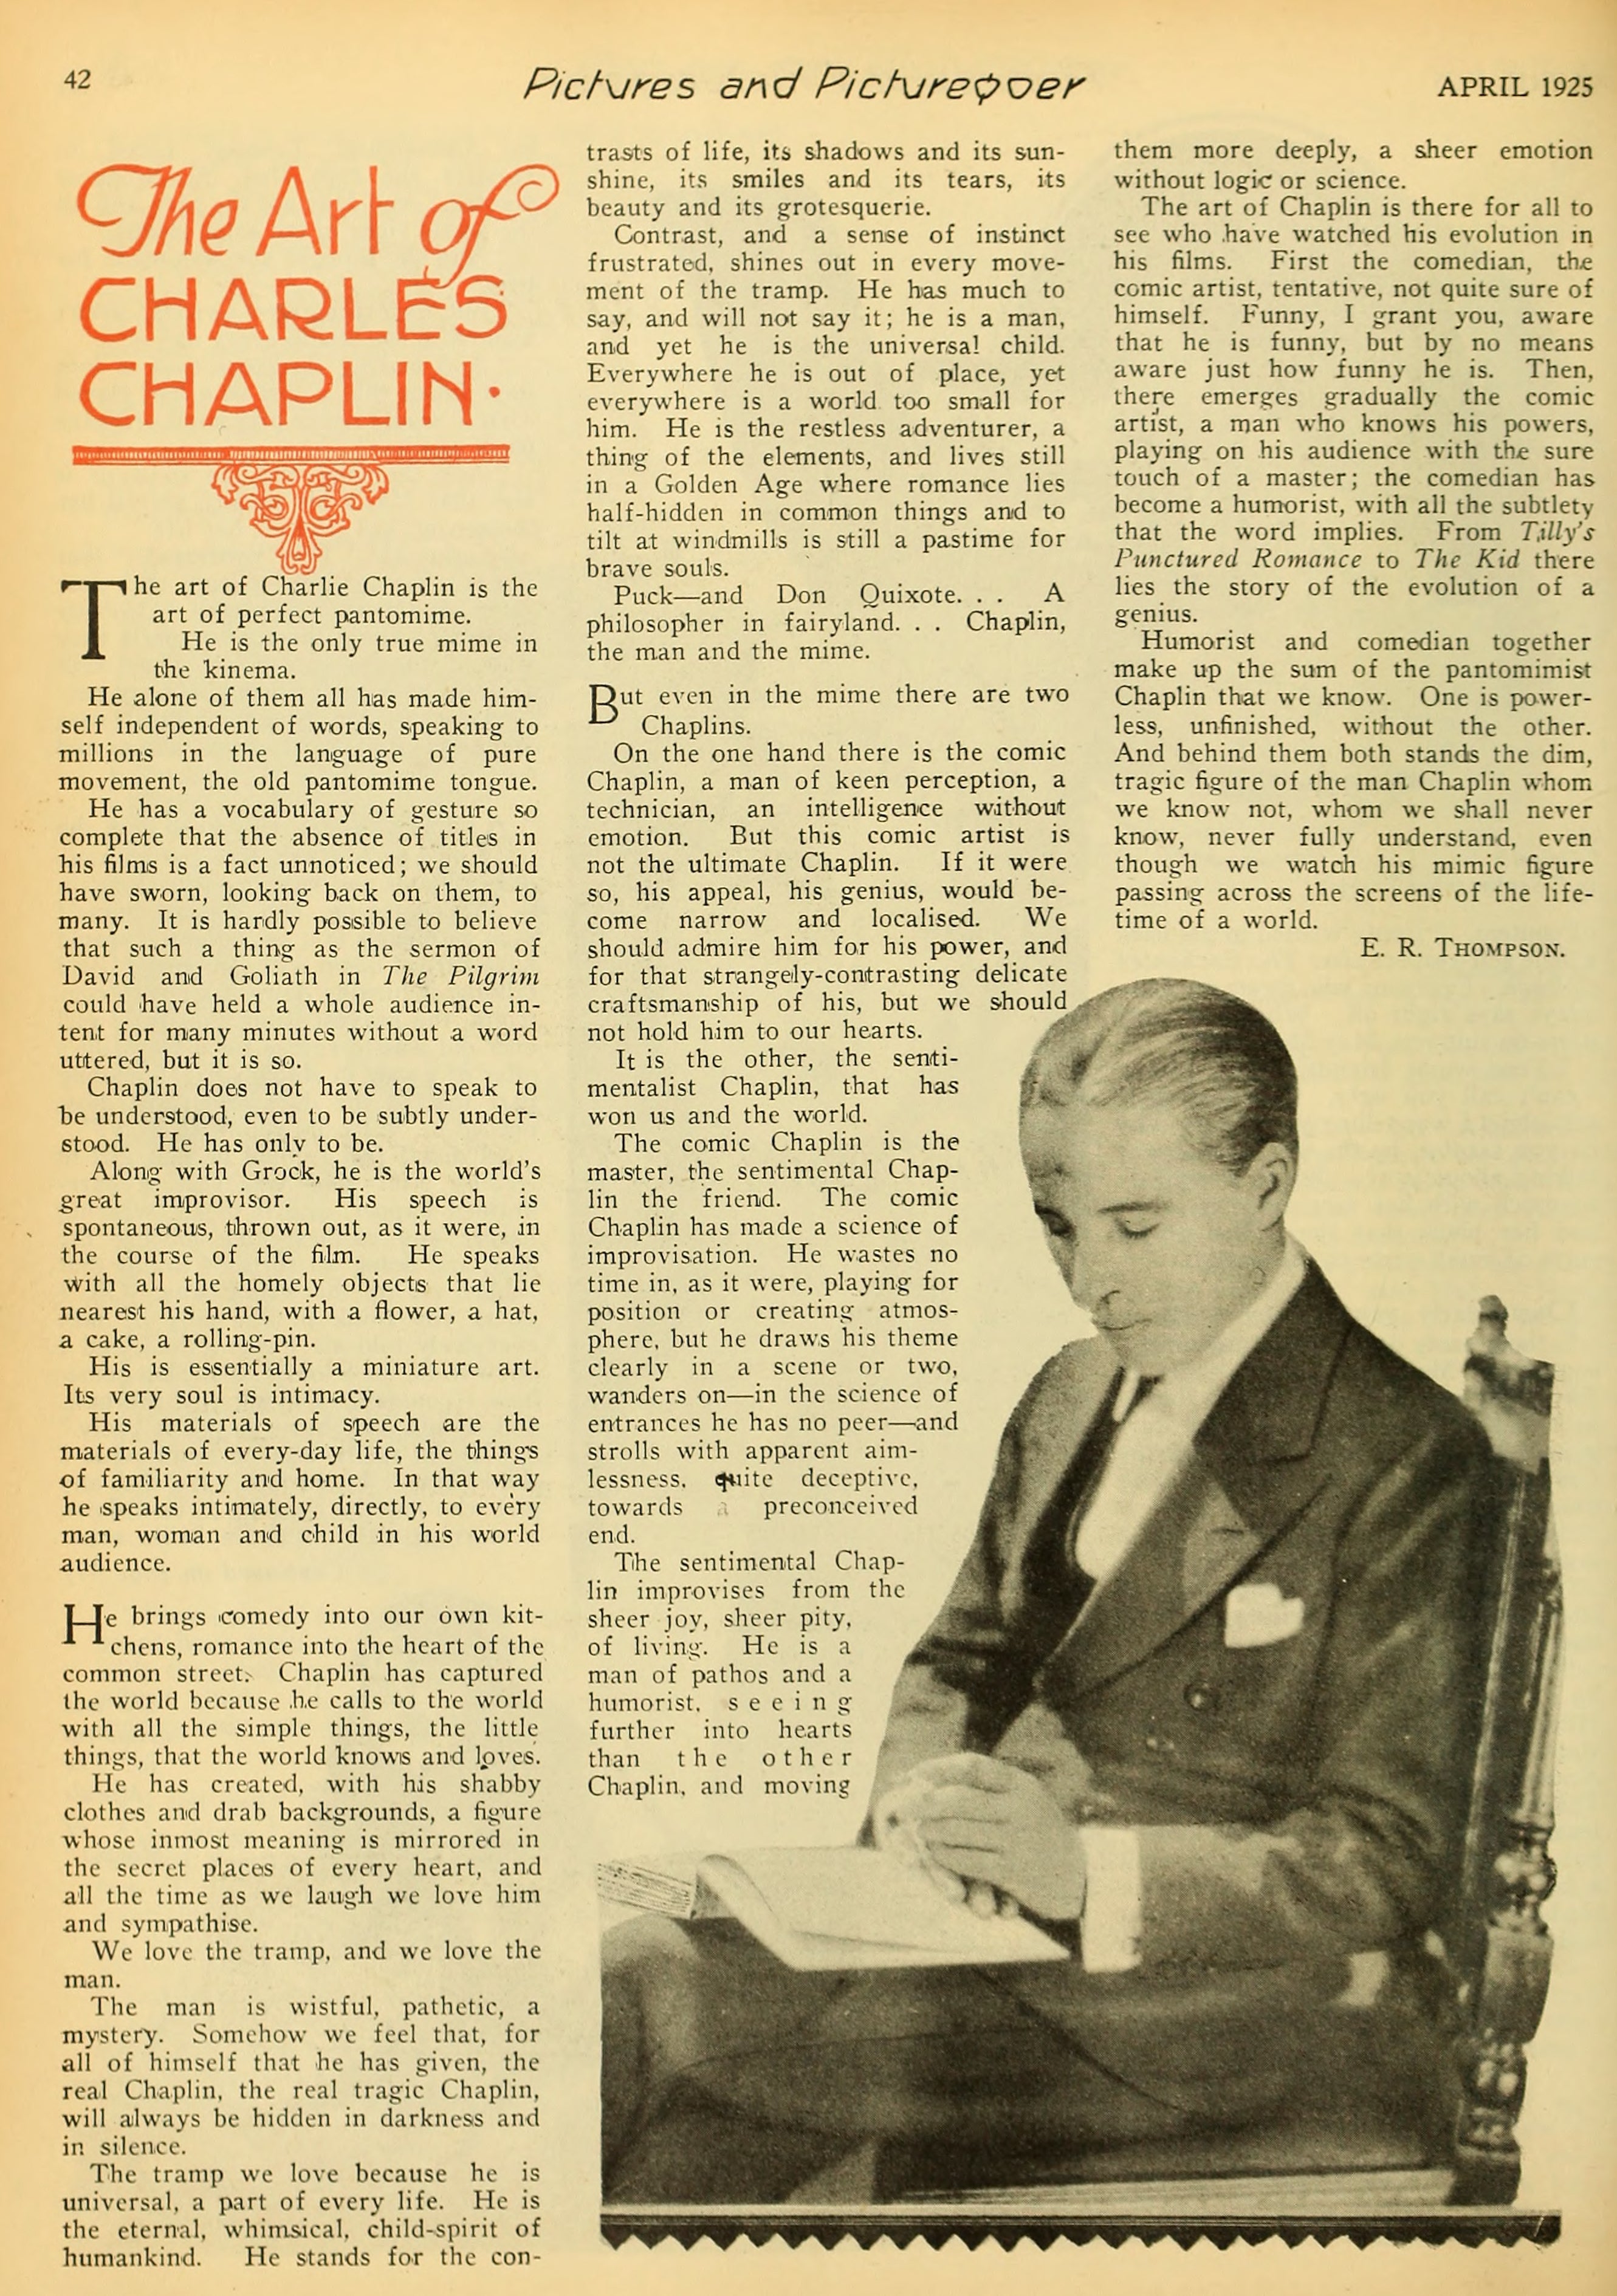 The Art of Charles Chaplin (1925) | www.vintoz.com